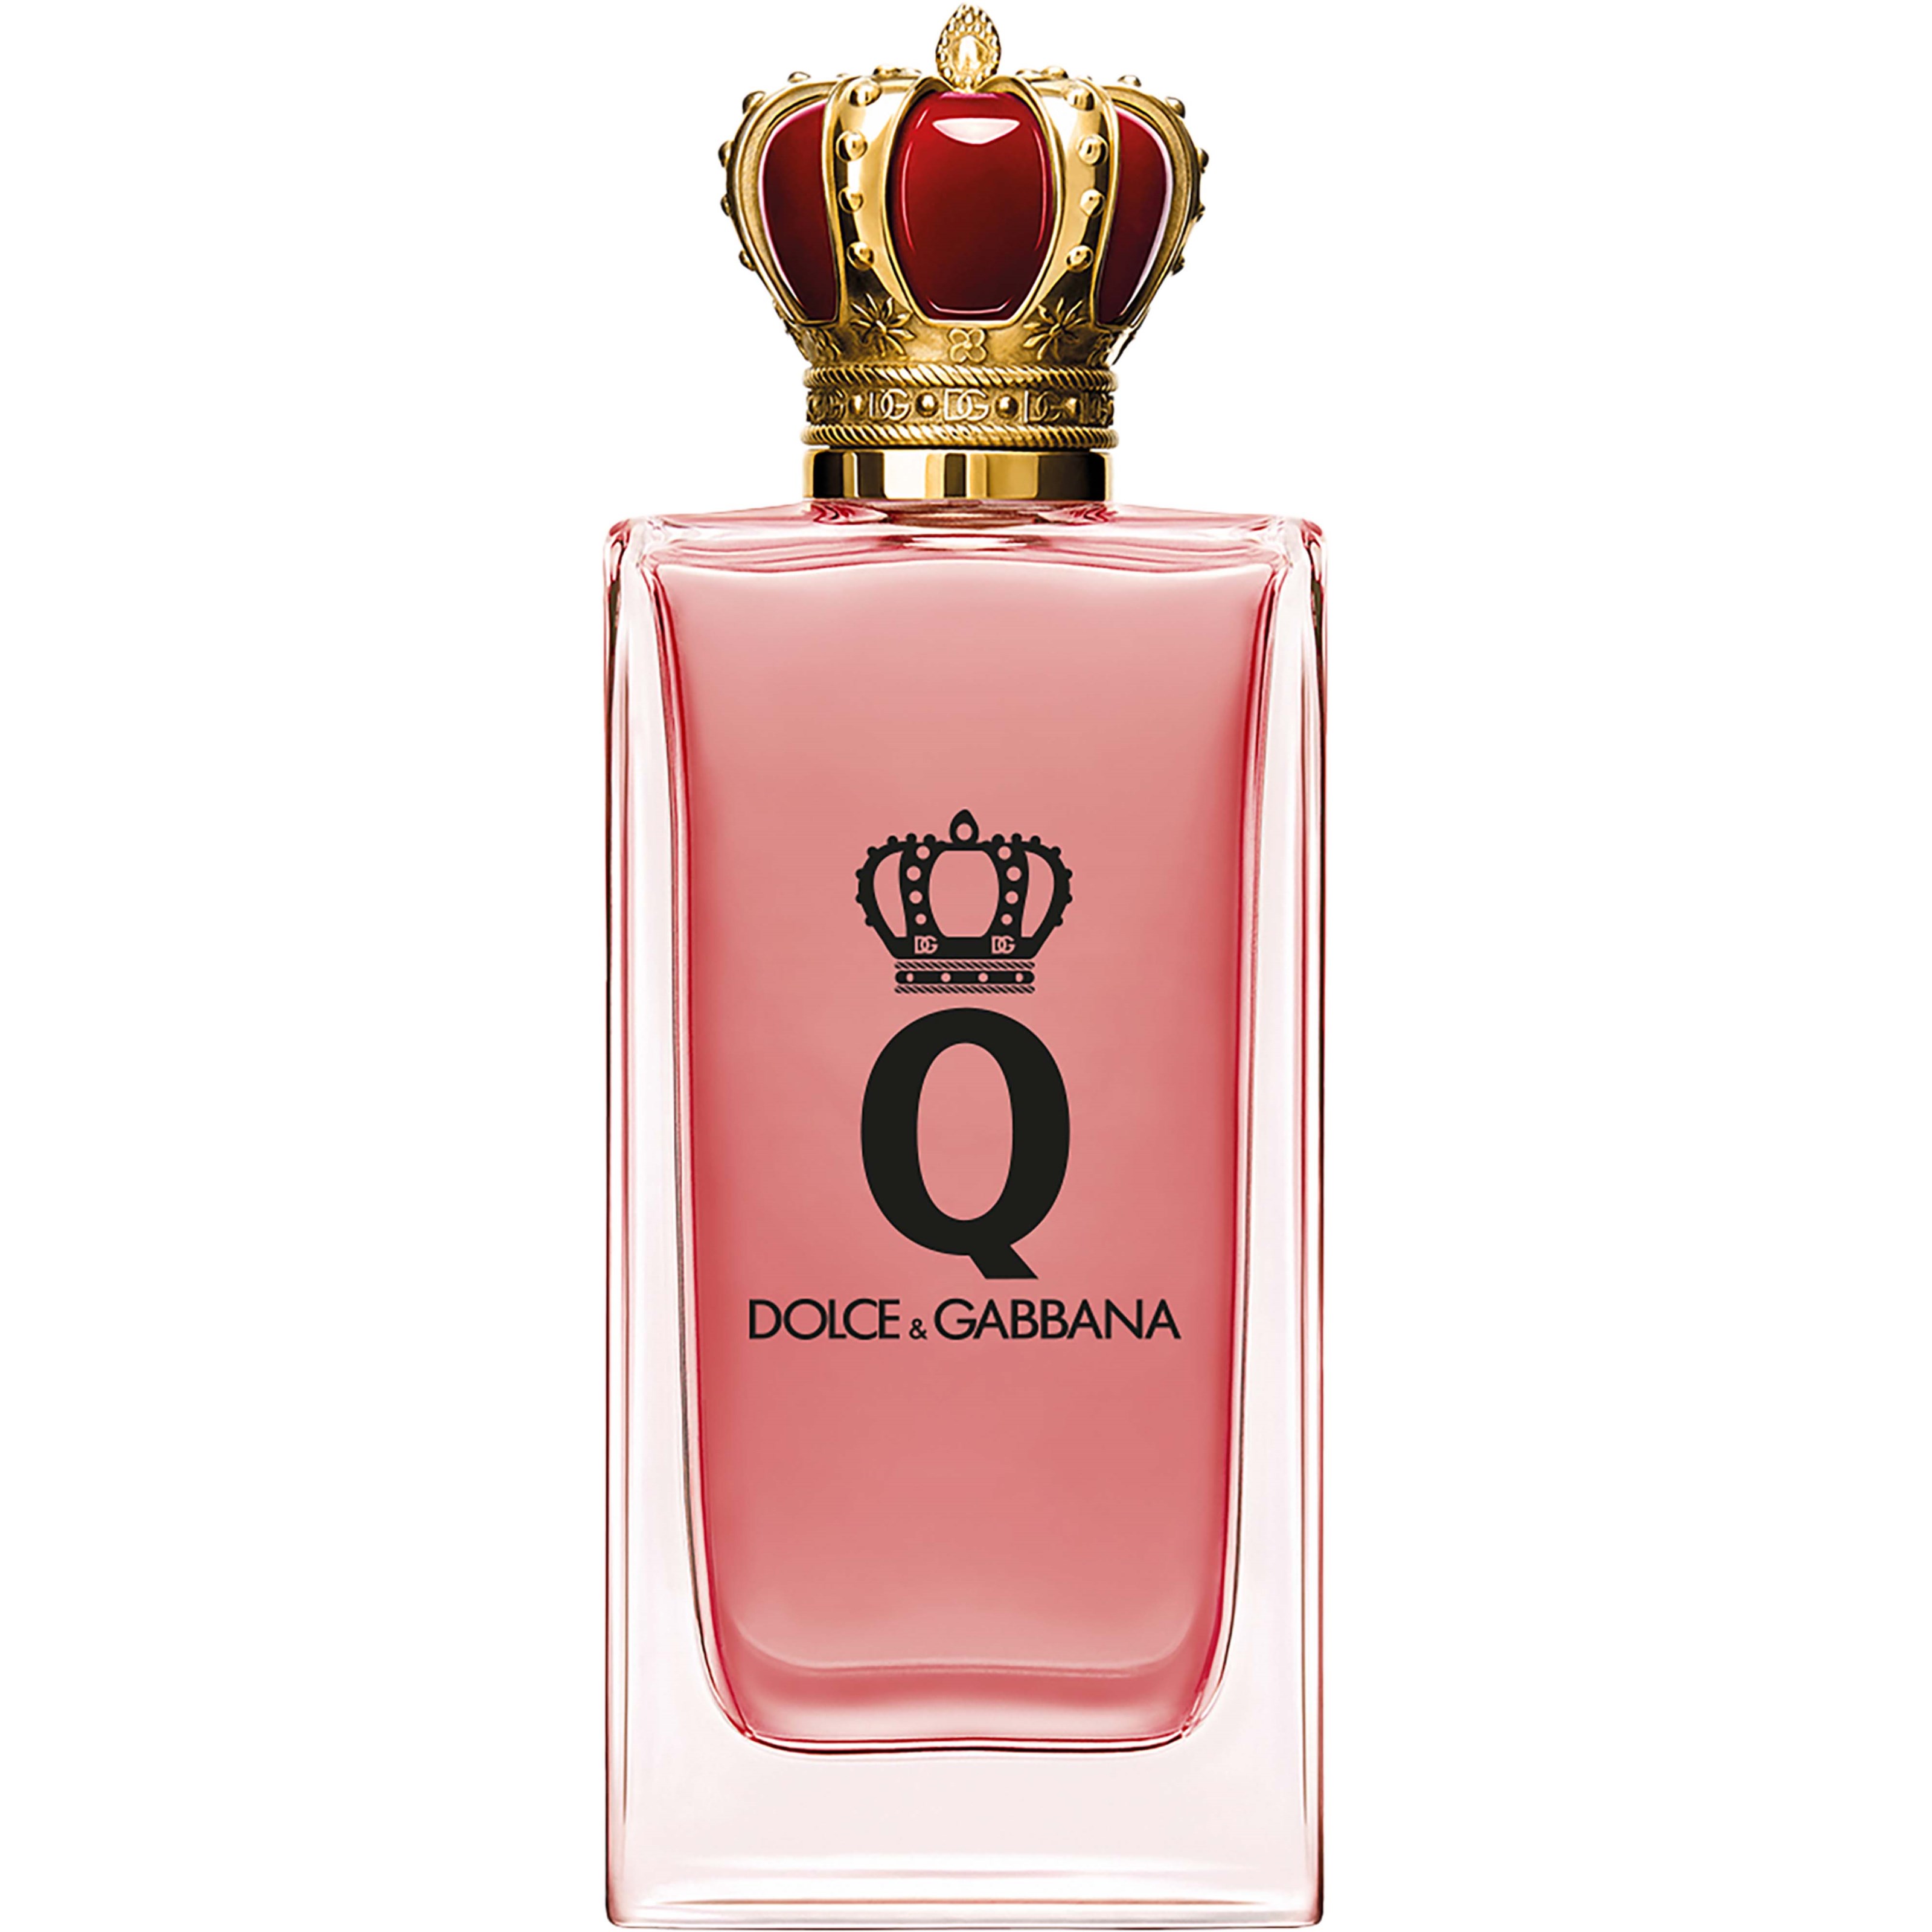 Zdjęcia - Perfuma damska D&G Dolce & Gabbana Q by Dolce&Gabbana Intense Eau de Parfum 100 ml 